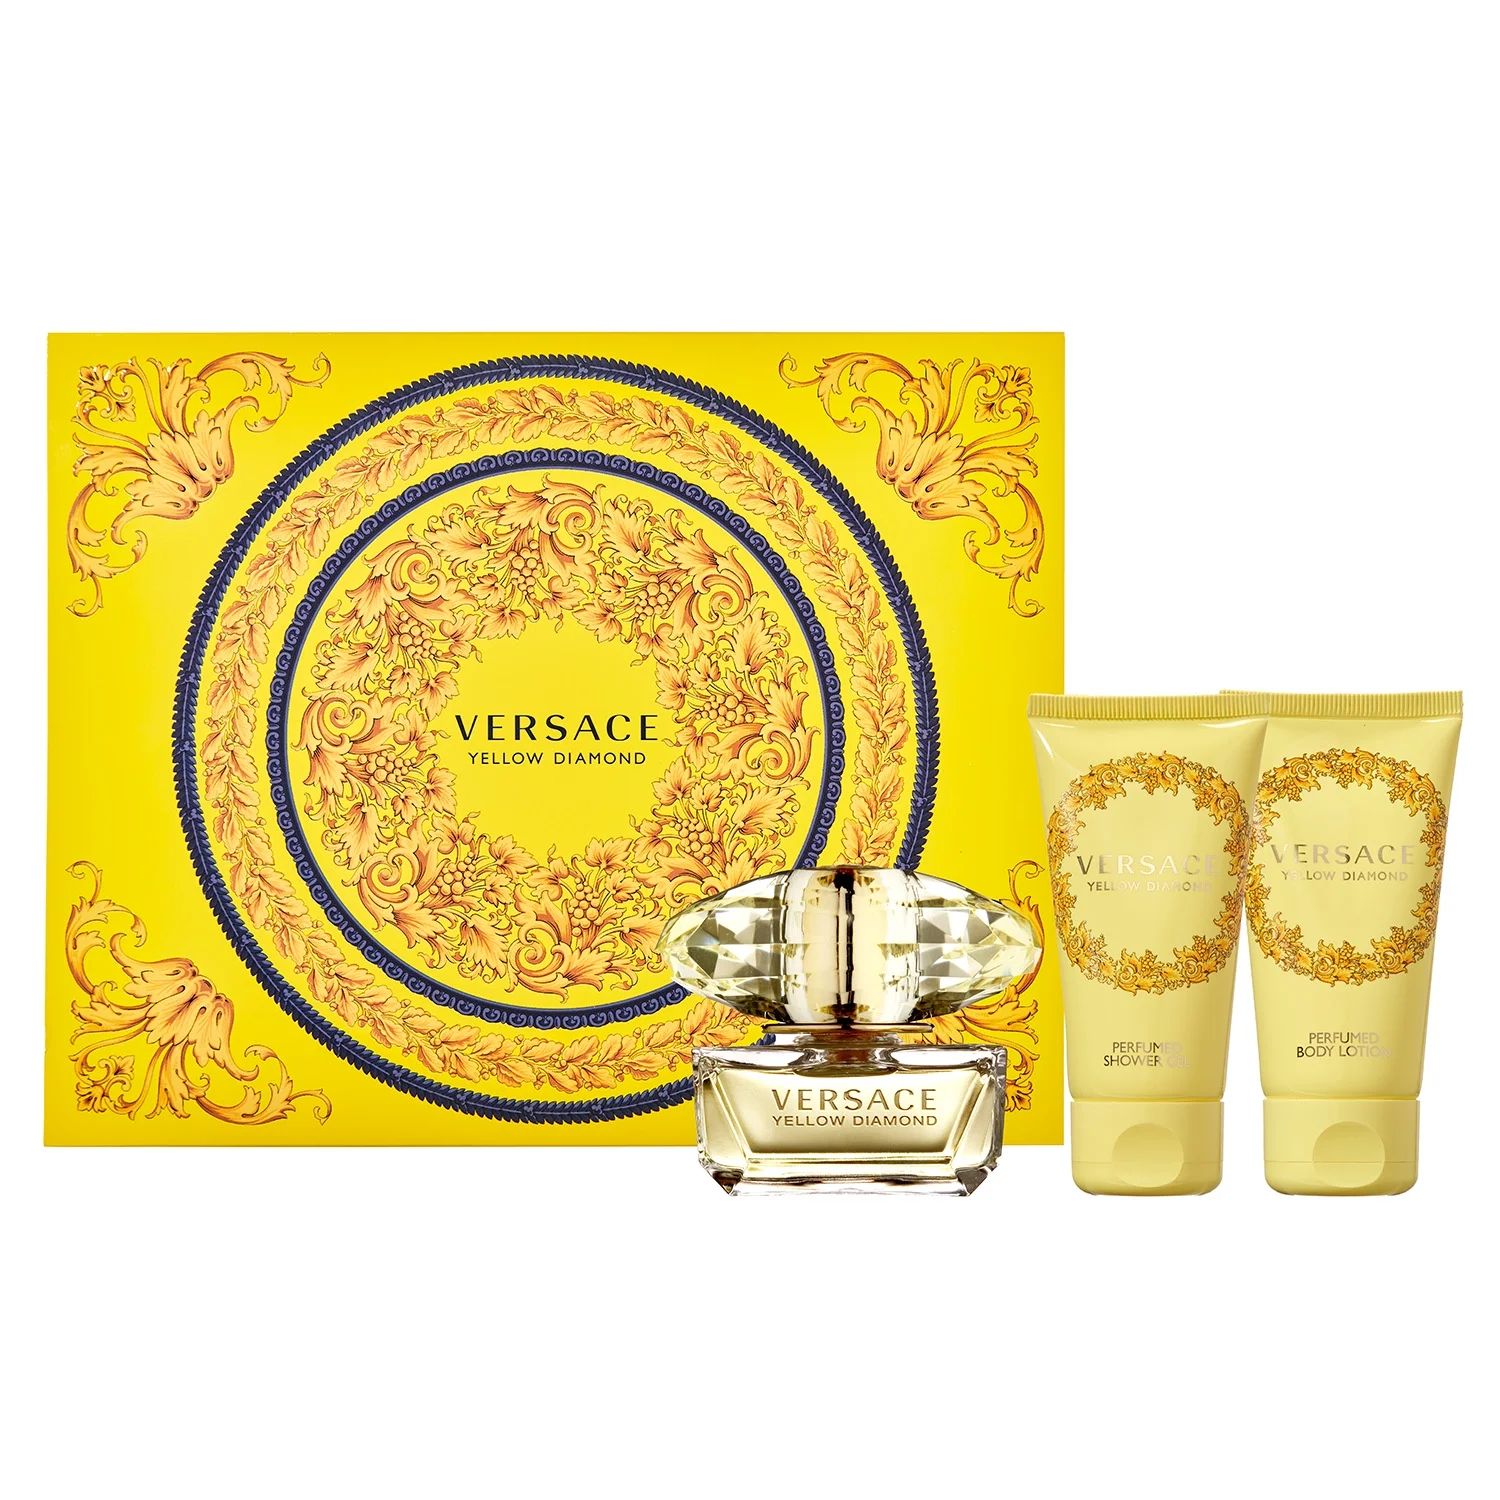 Versace Yellow Diamond Eau de Toilette, Perfume Gift Set for Women, 3 Pieces | Walmart (US)